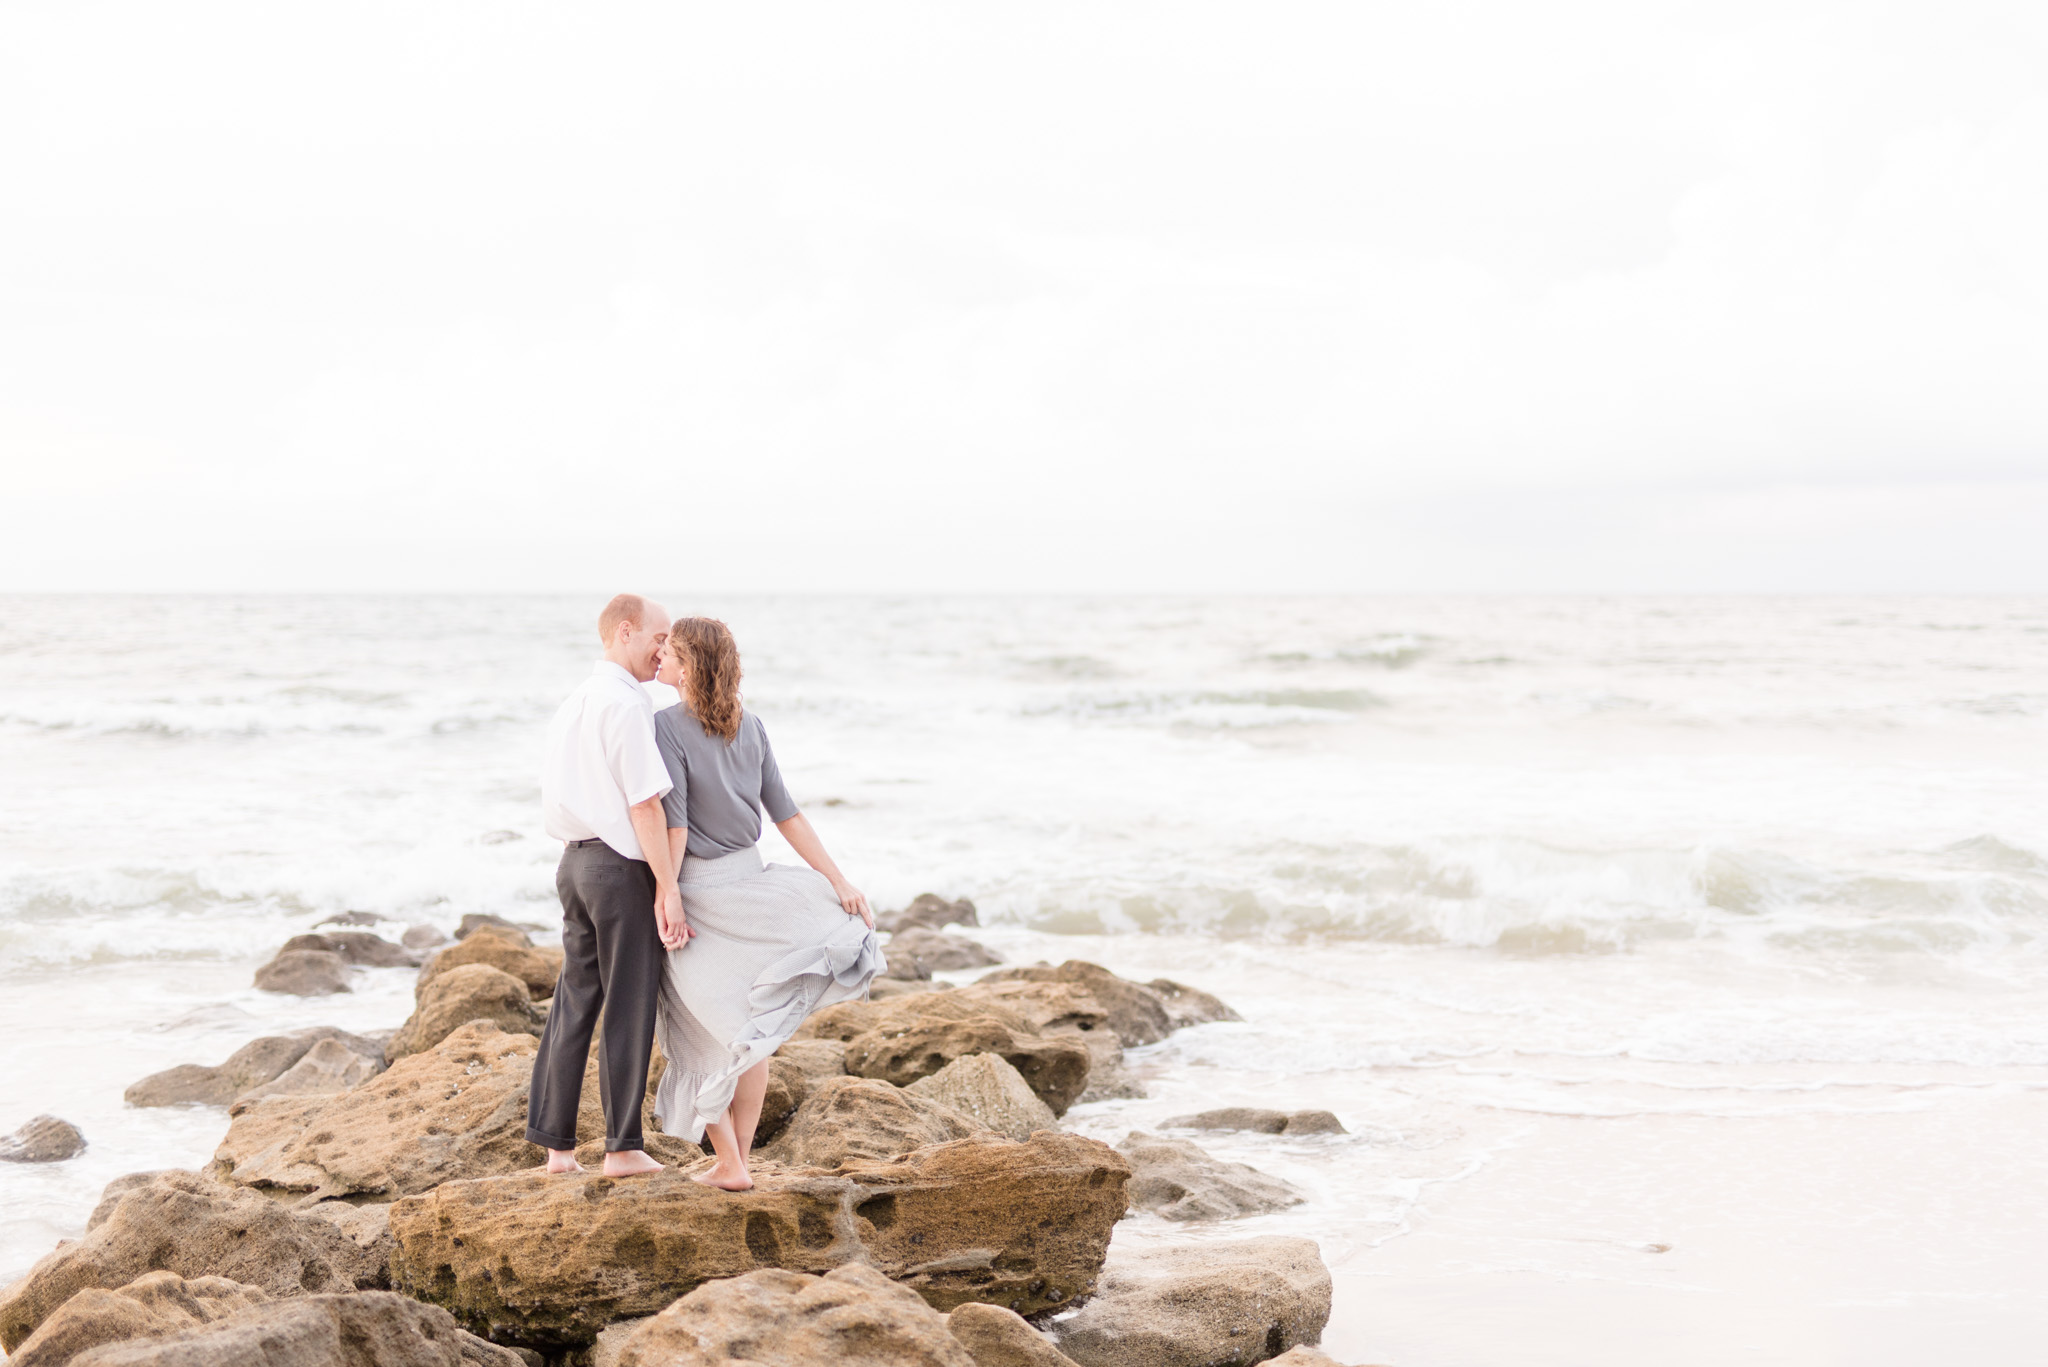 Couple kisses on beach rocks at sunset.